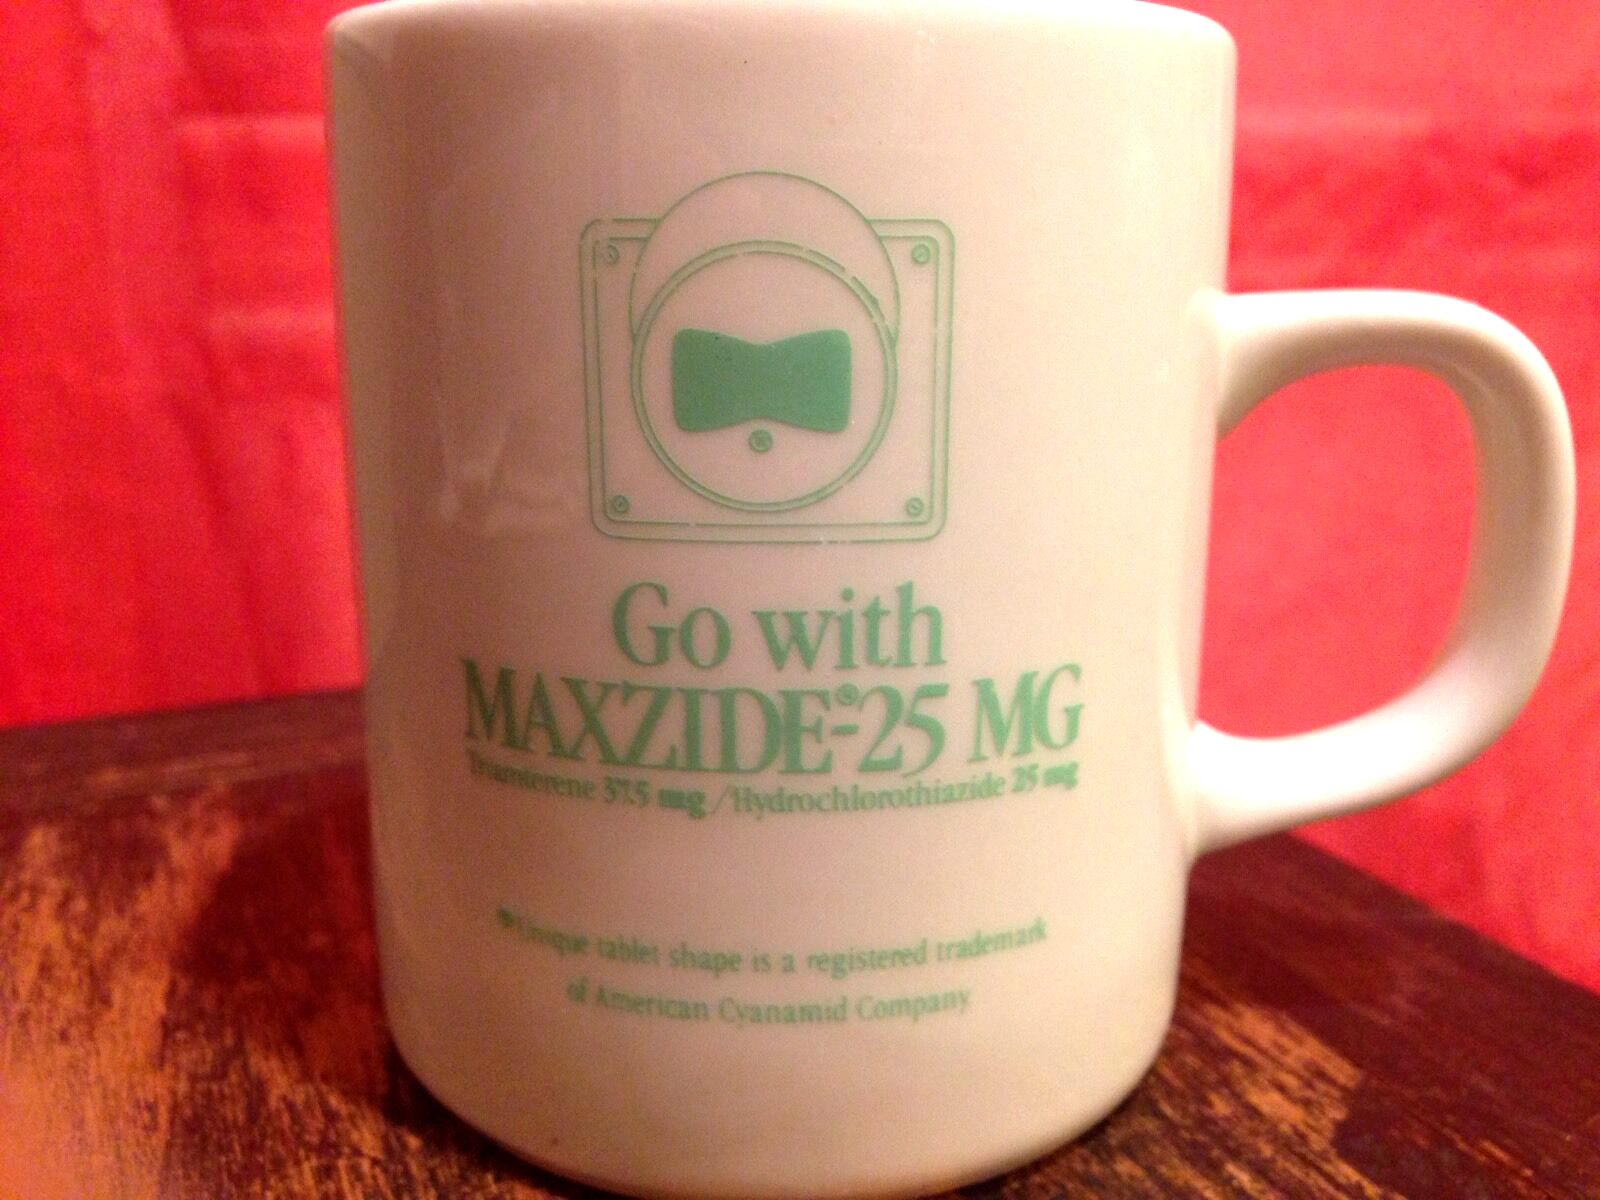 VMAXZIDE-25 1989 Mug/Cup Half Cost of Coffee pharmaceutical Cyanamid DRUG REP